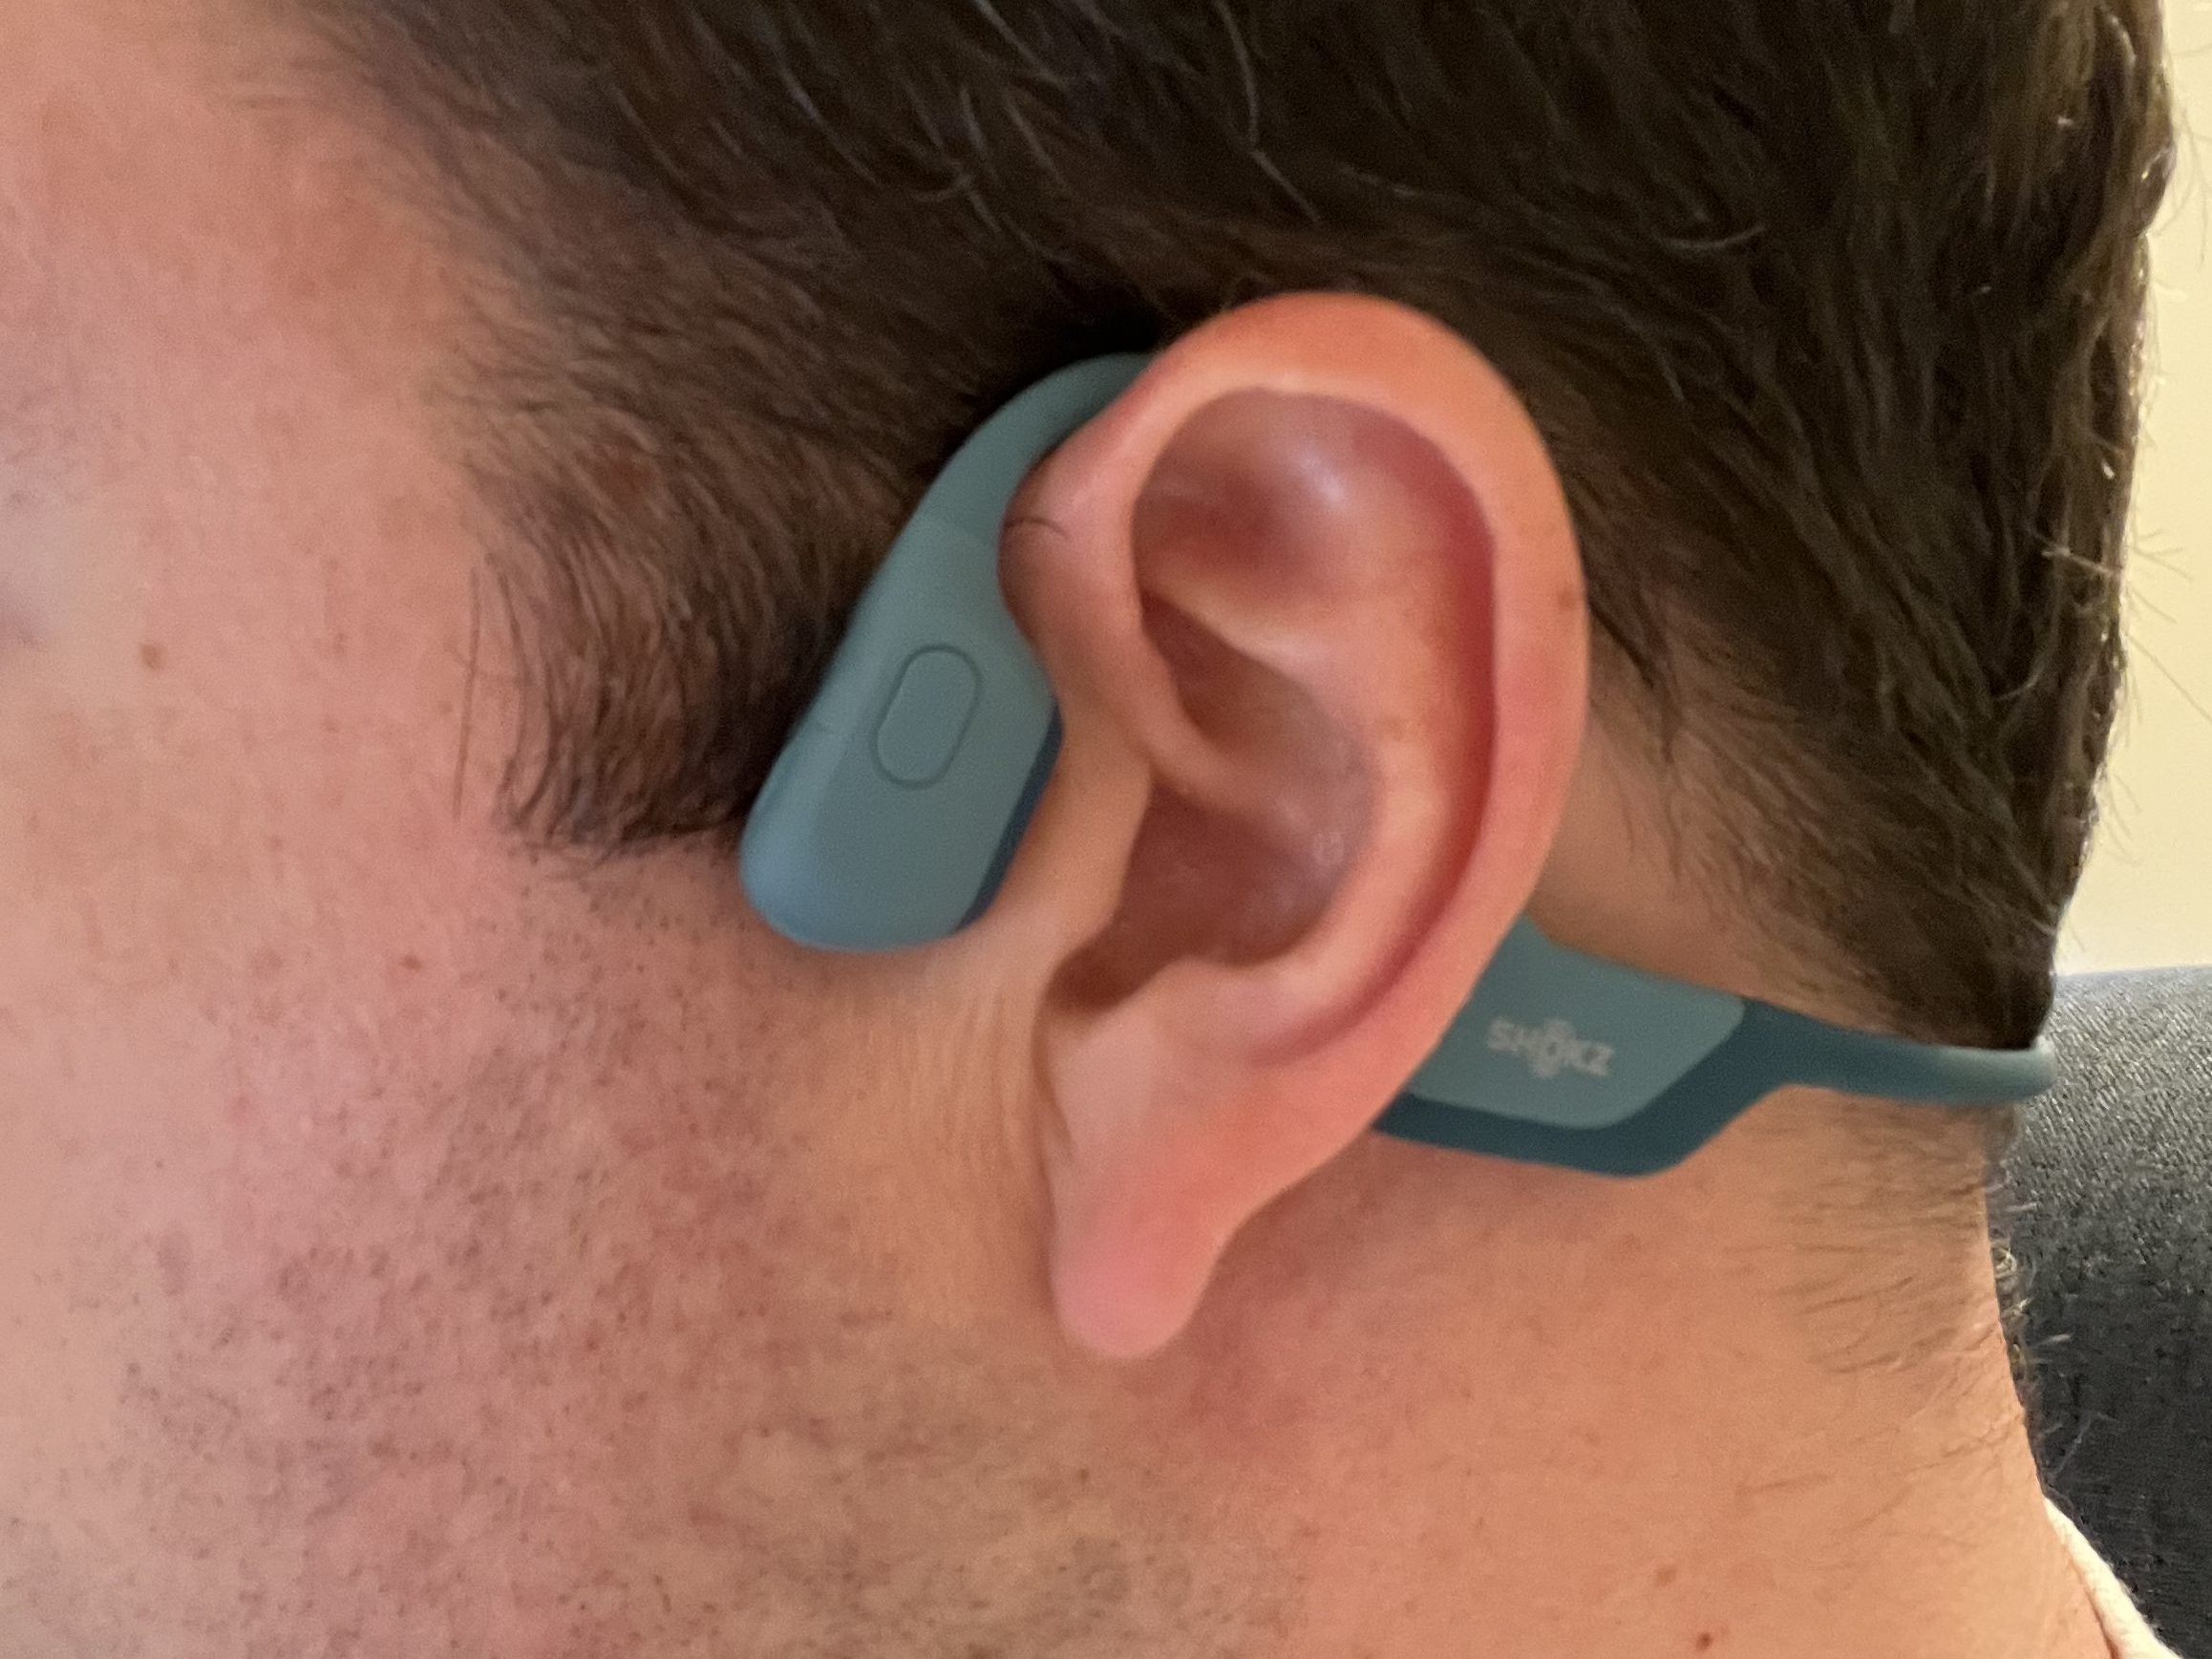  PURERINA Bone Conduction Headphones Open Ear